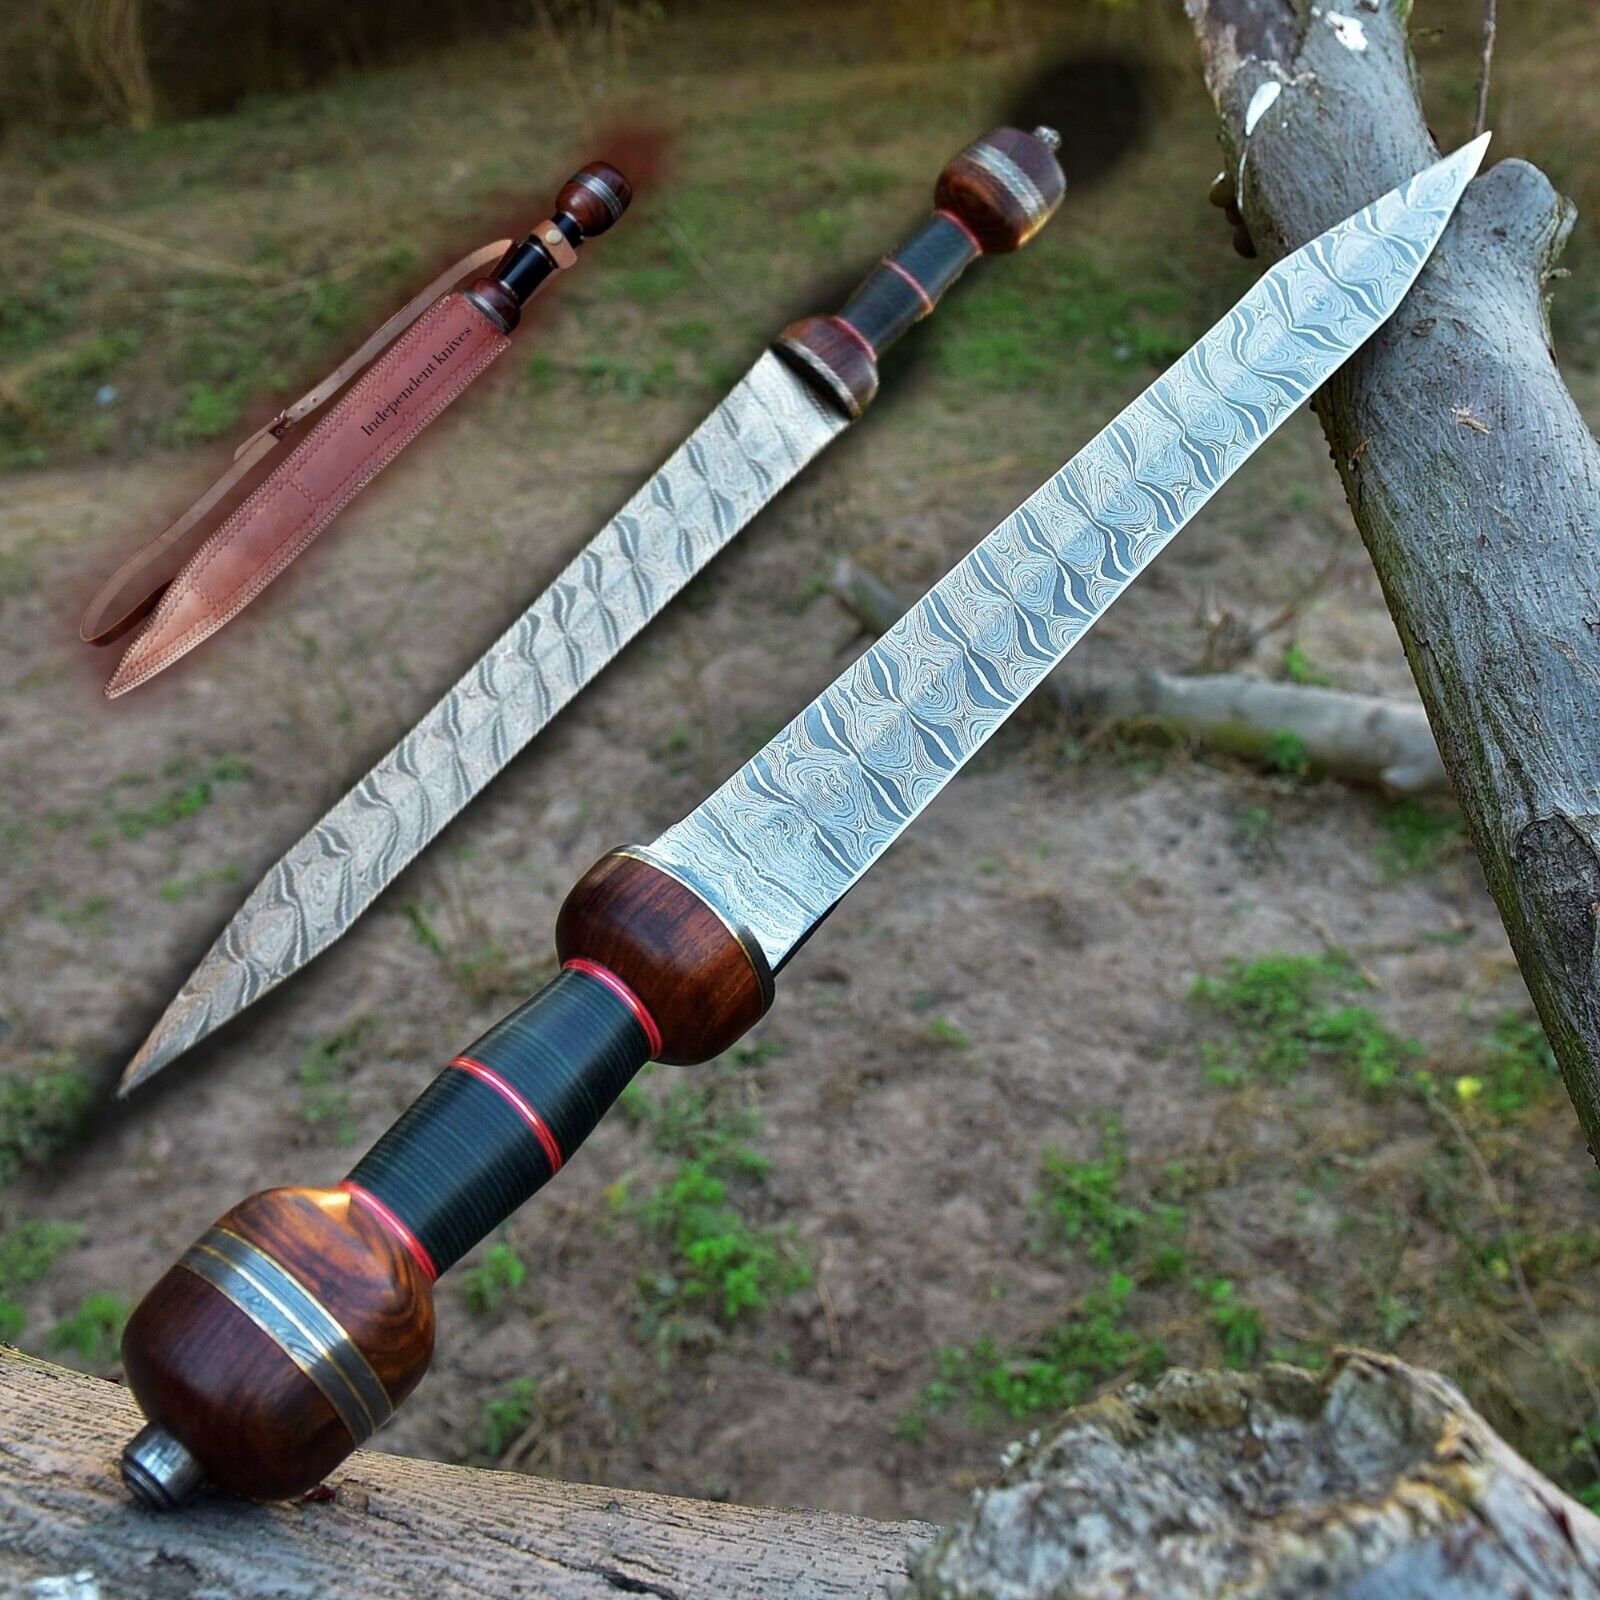 Sword - 27 Inches\' Damascus Steel - Battle Ready-Roman Gladius Sword \'\'Full Tang